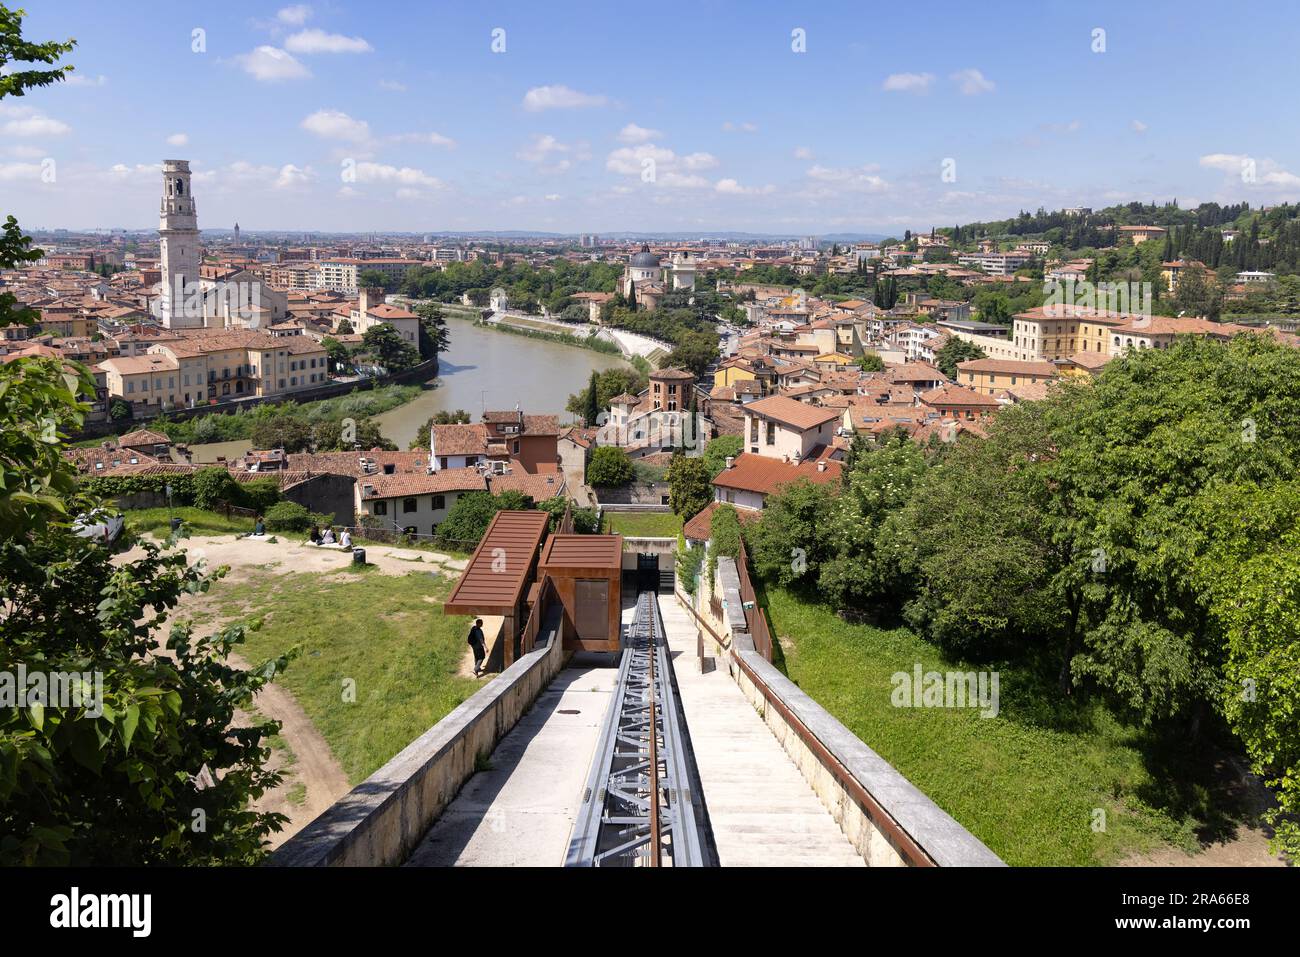 Verona Italy - view from the funicular of the city and river Adige on a sunny spring day; Verona, Veneto, Northern Italy. Verona cityscape Stock Photo